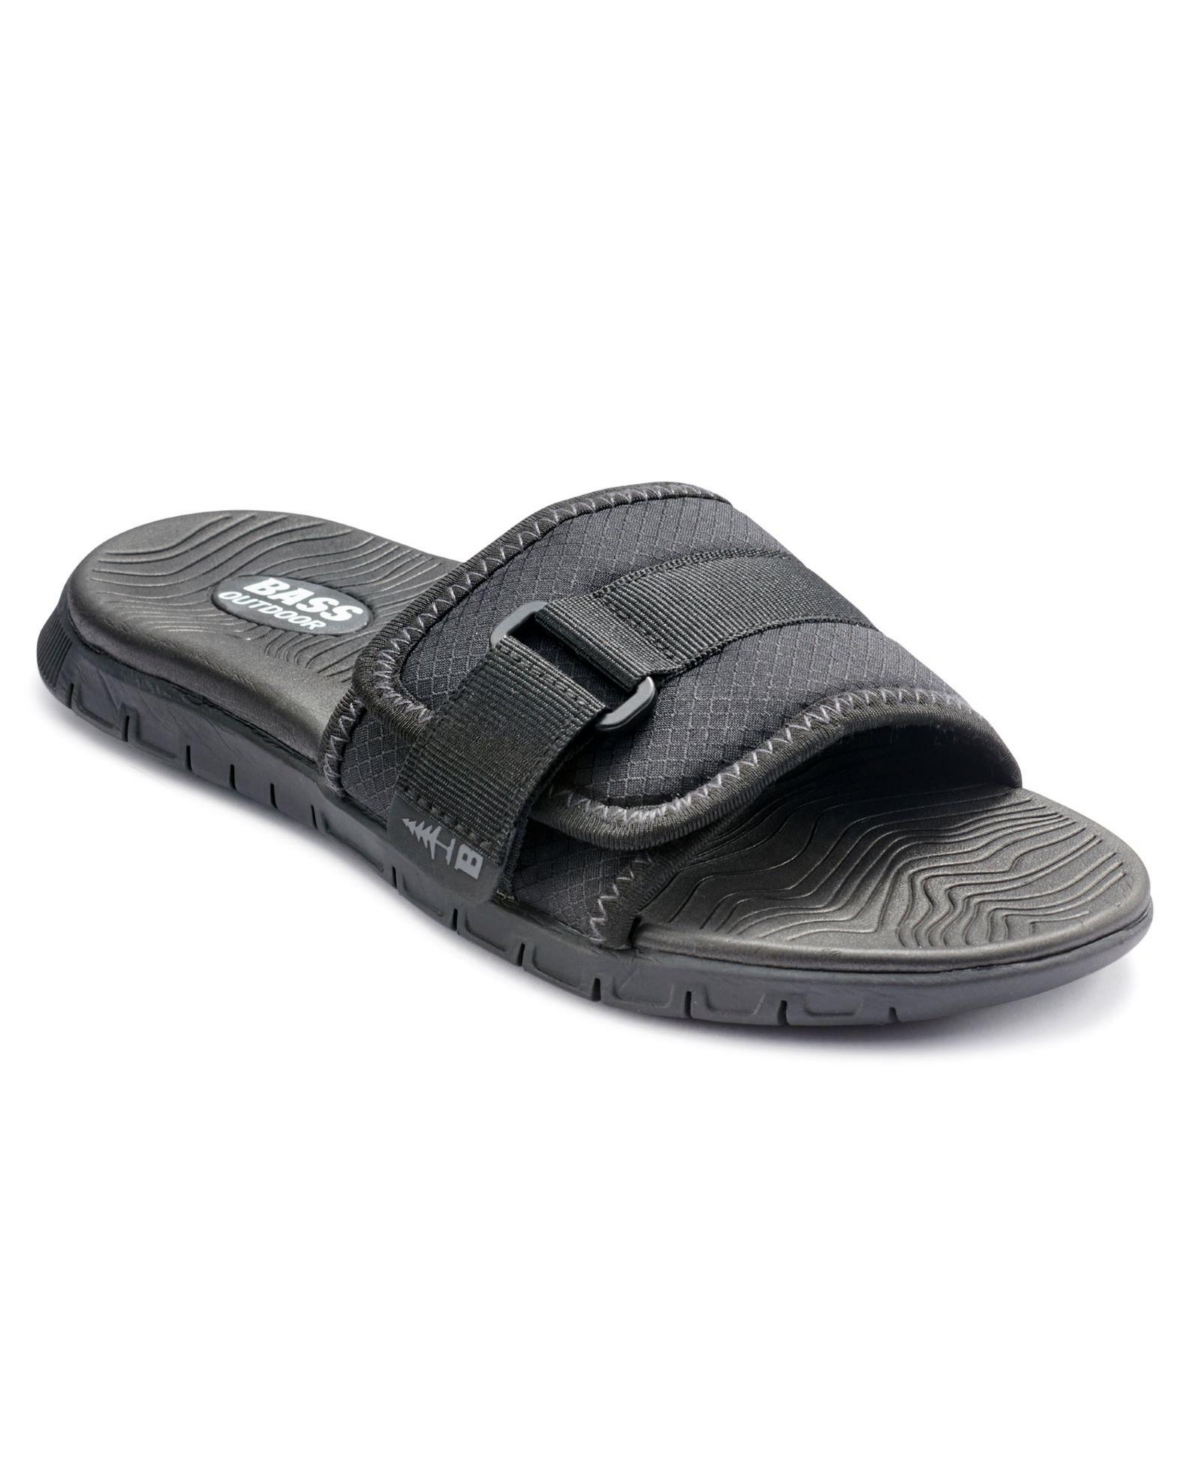 Women's Topo Utility Sandal Hiking Shoe - Black